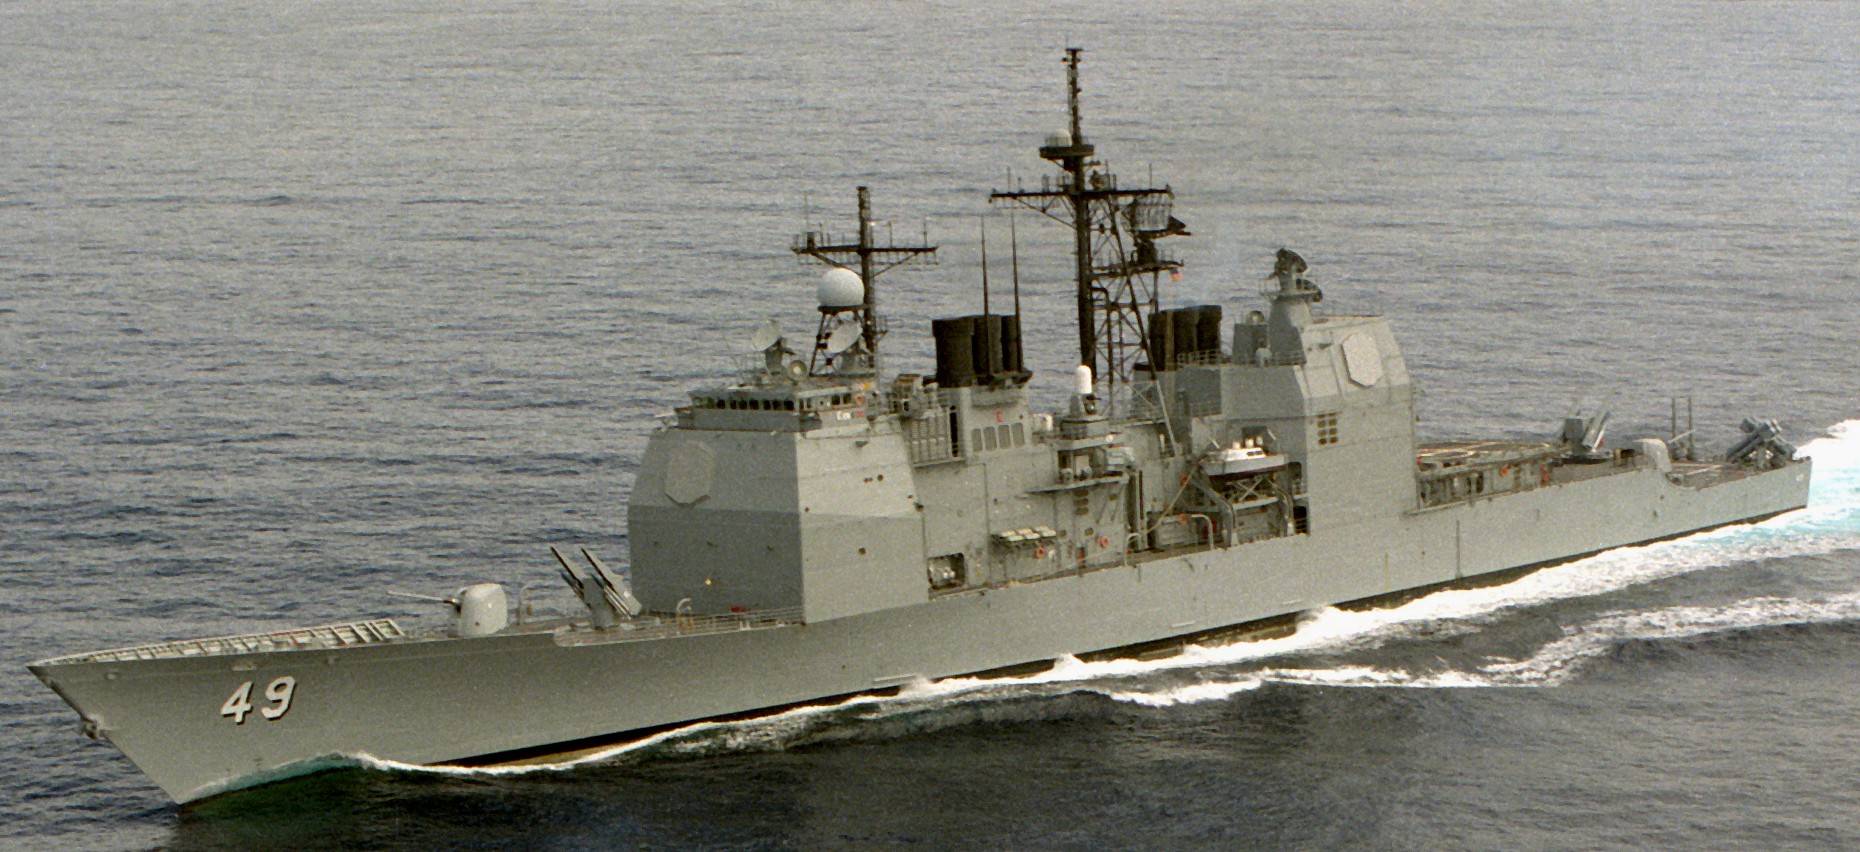 cg-49 uss vincennes ticonderoga class guided missile cruiser aegis us navy 57